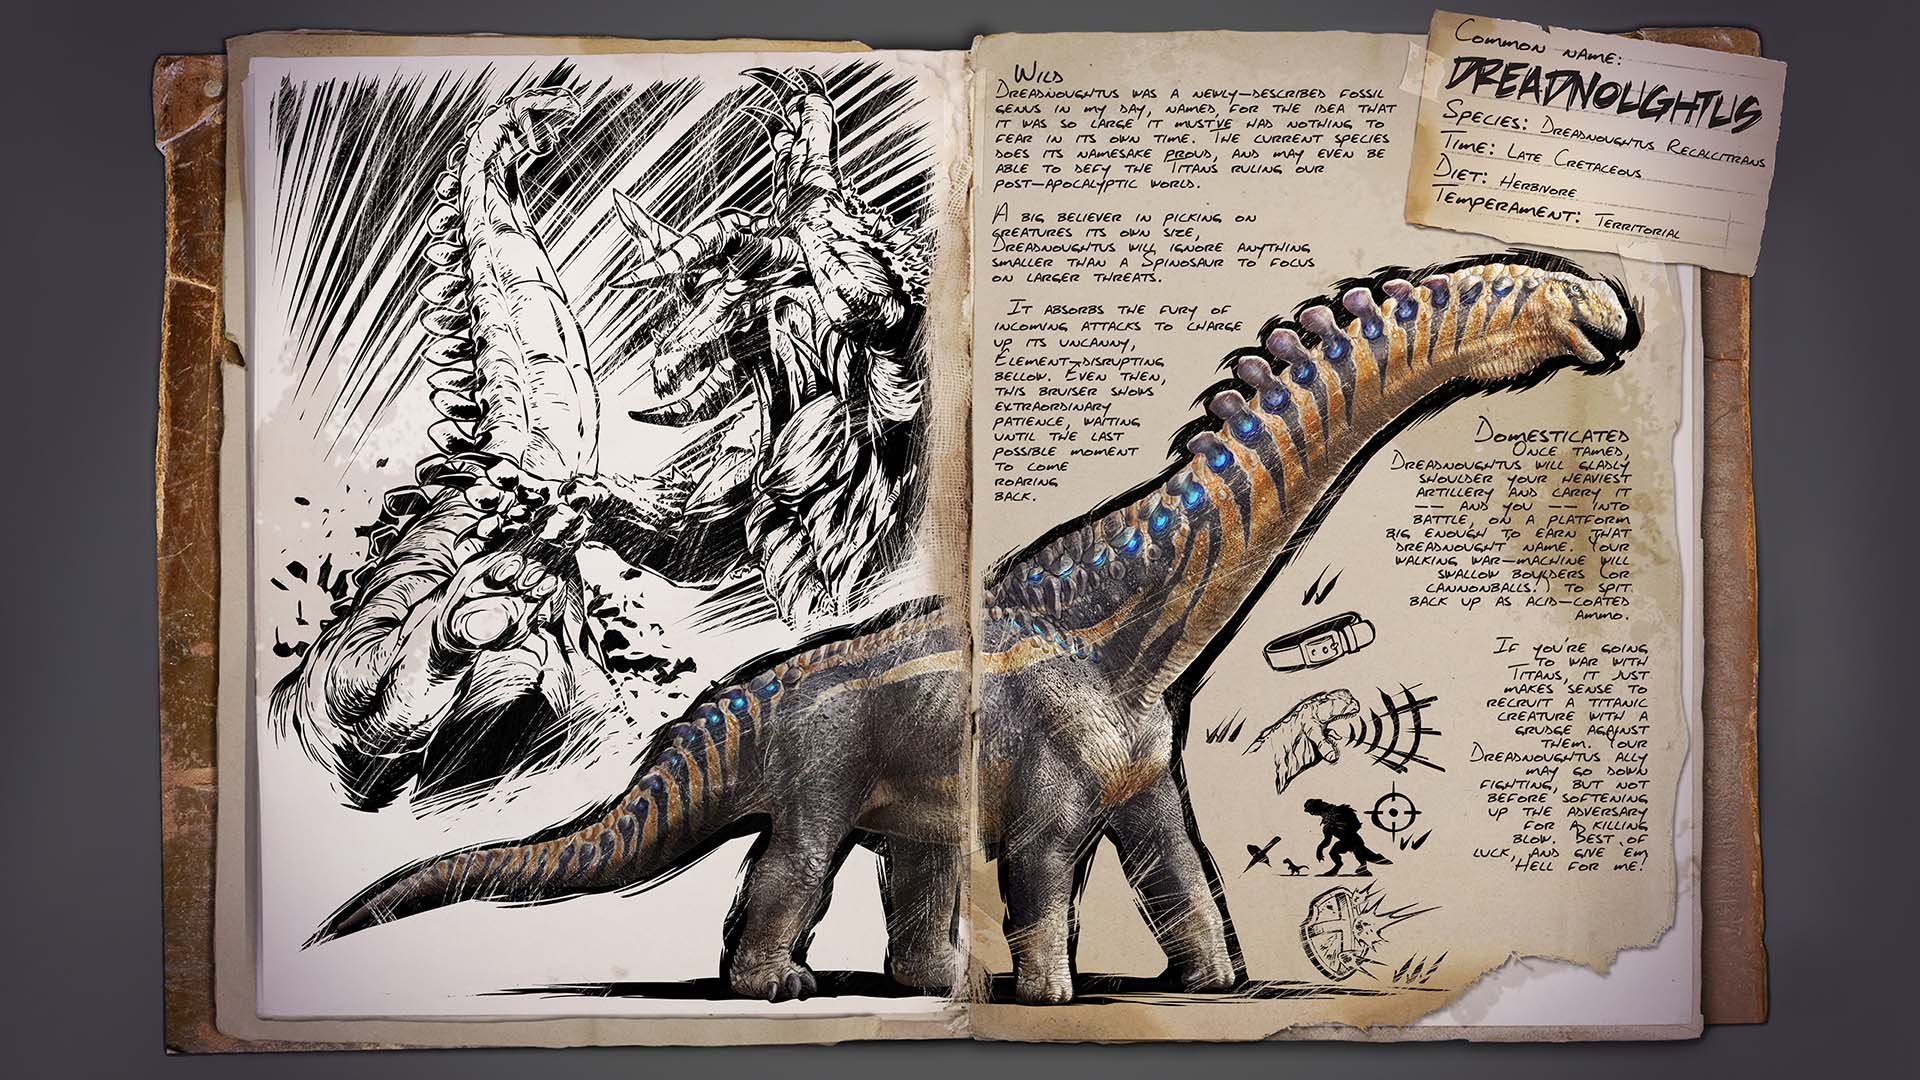 Ark survival ascended scorched earth. АРК досье. Dreadnoughtus Ark. Dreadnoughtus schrani. Файлы досье в фантастических форматах будущего.